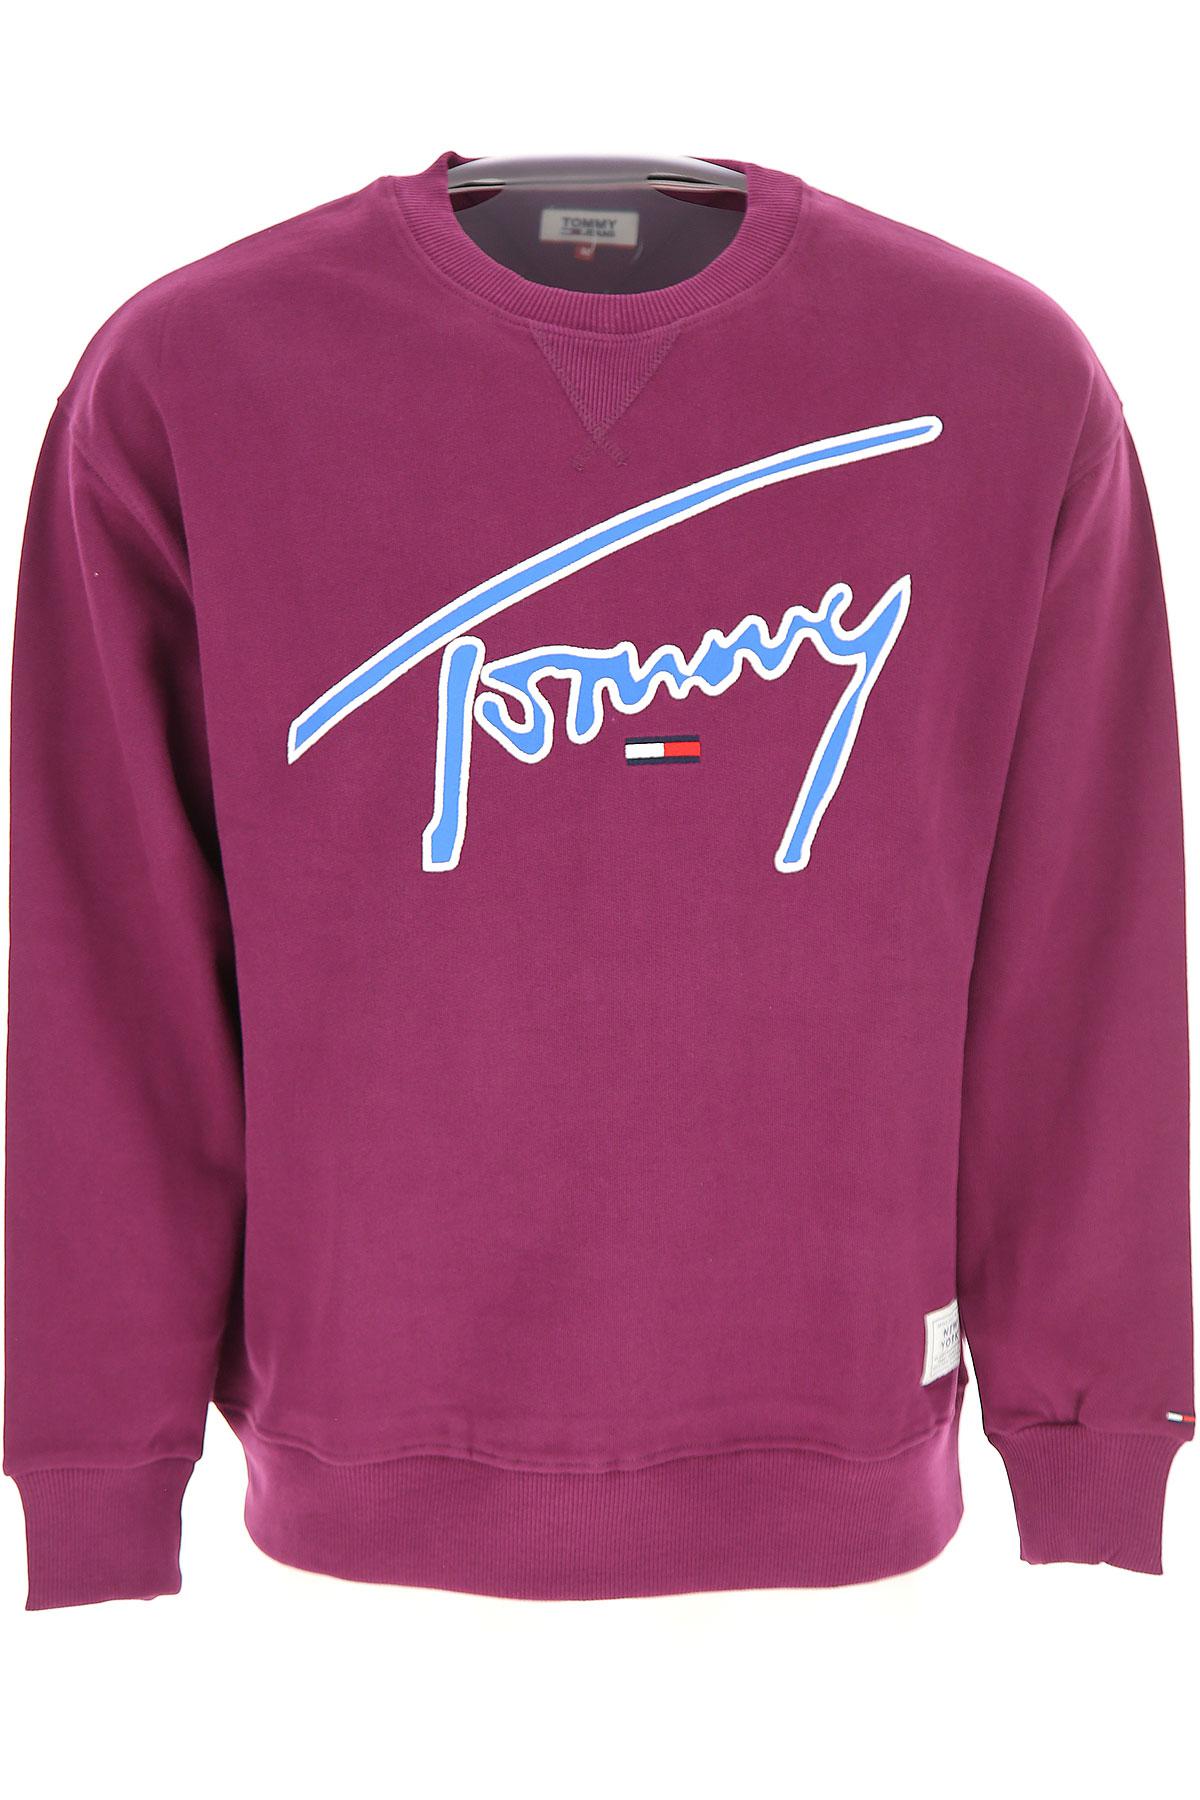 Tommy Hilfiger Purple Sweatshirt Hot Sale, SAVE 33% - raptorunderlayment.com